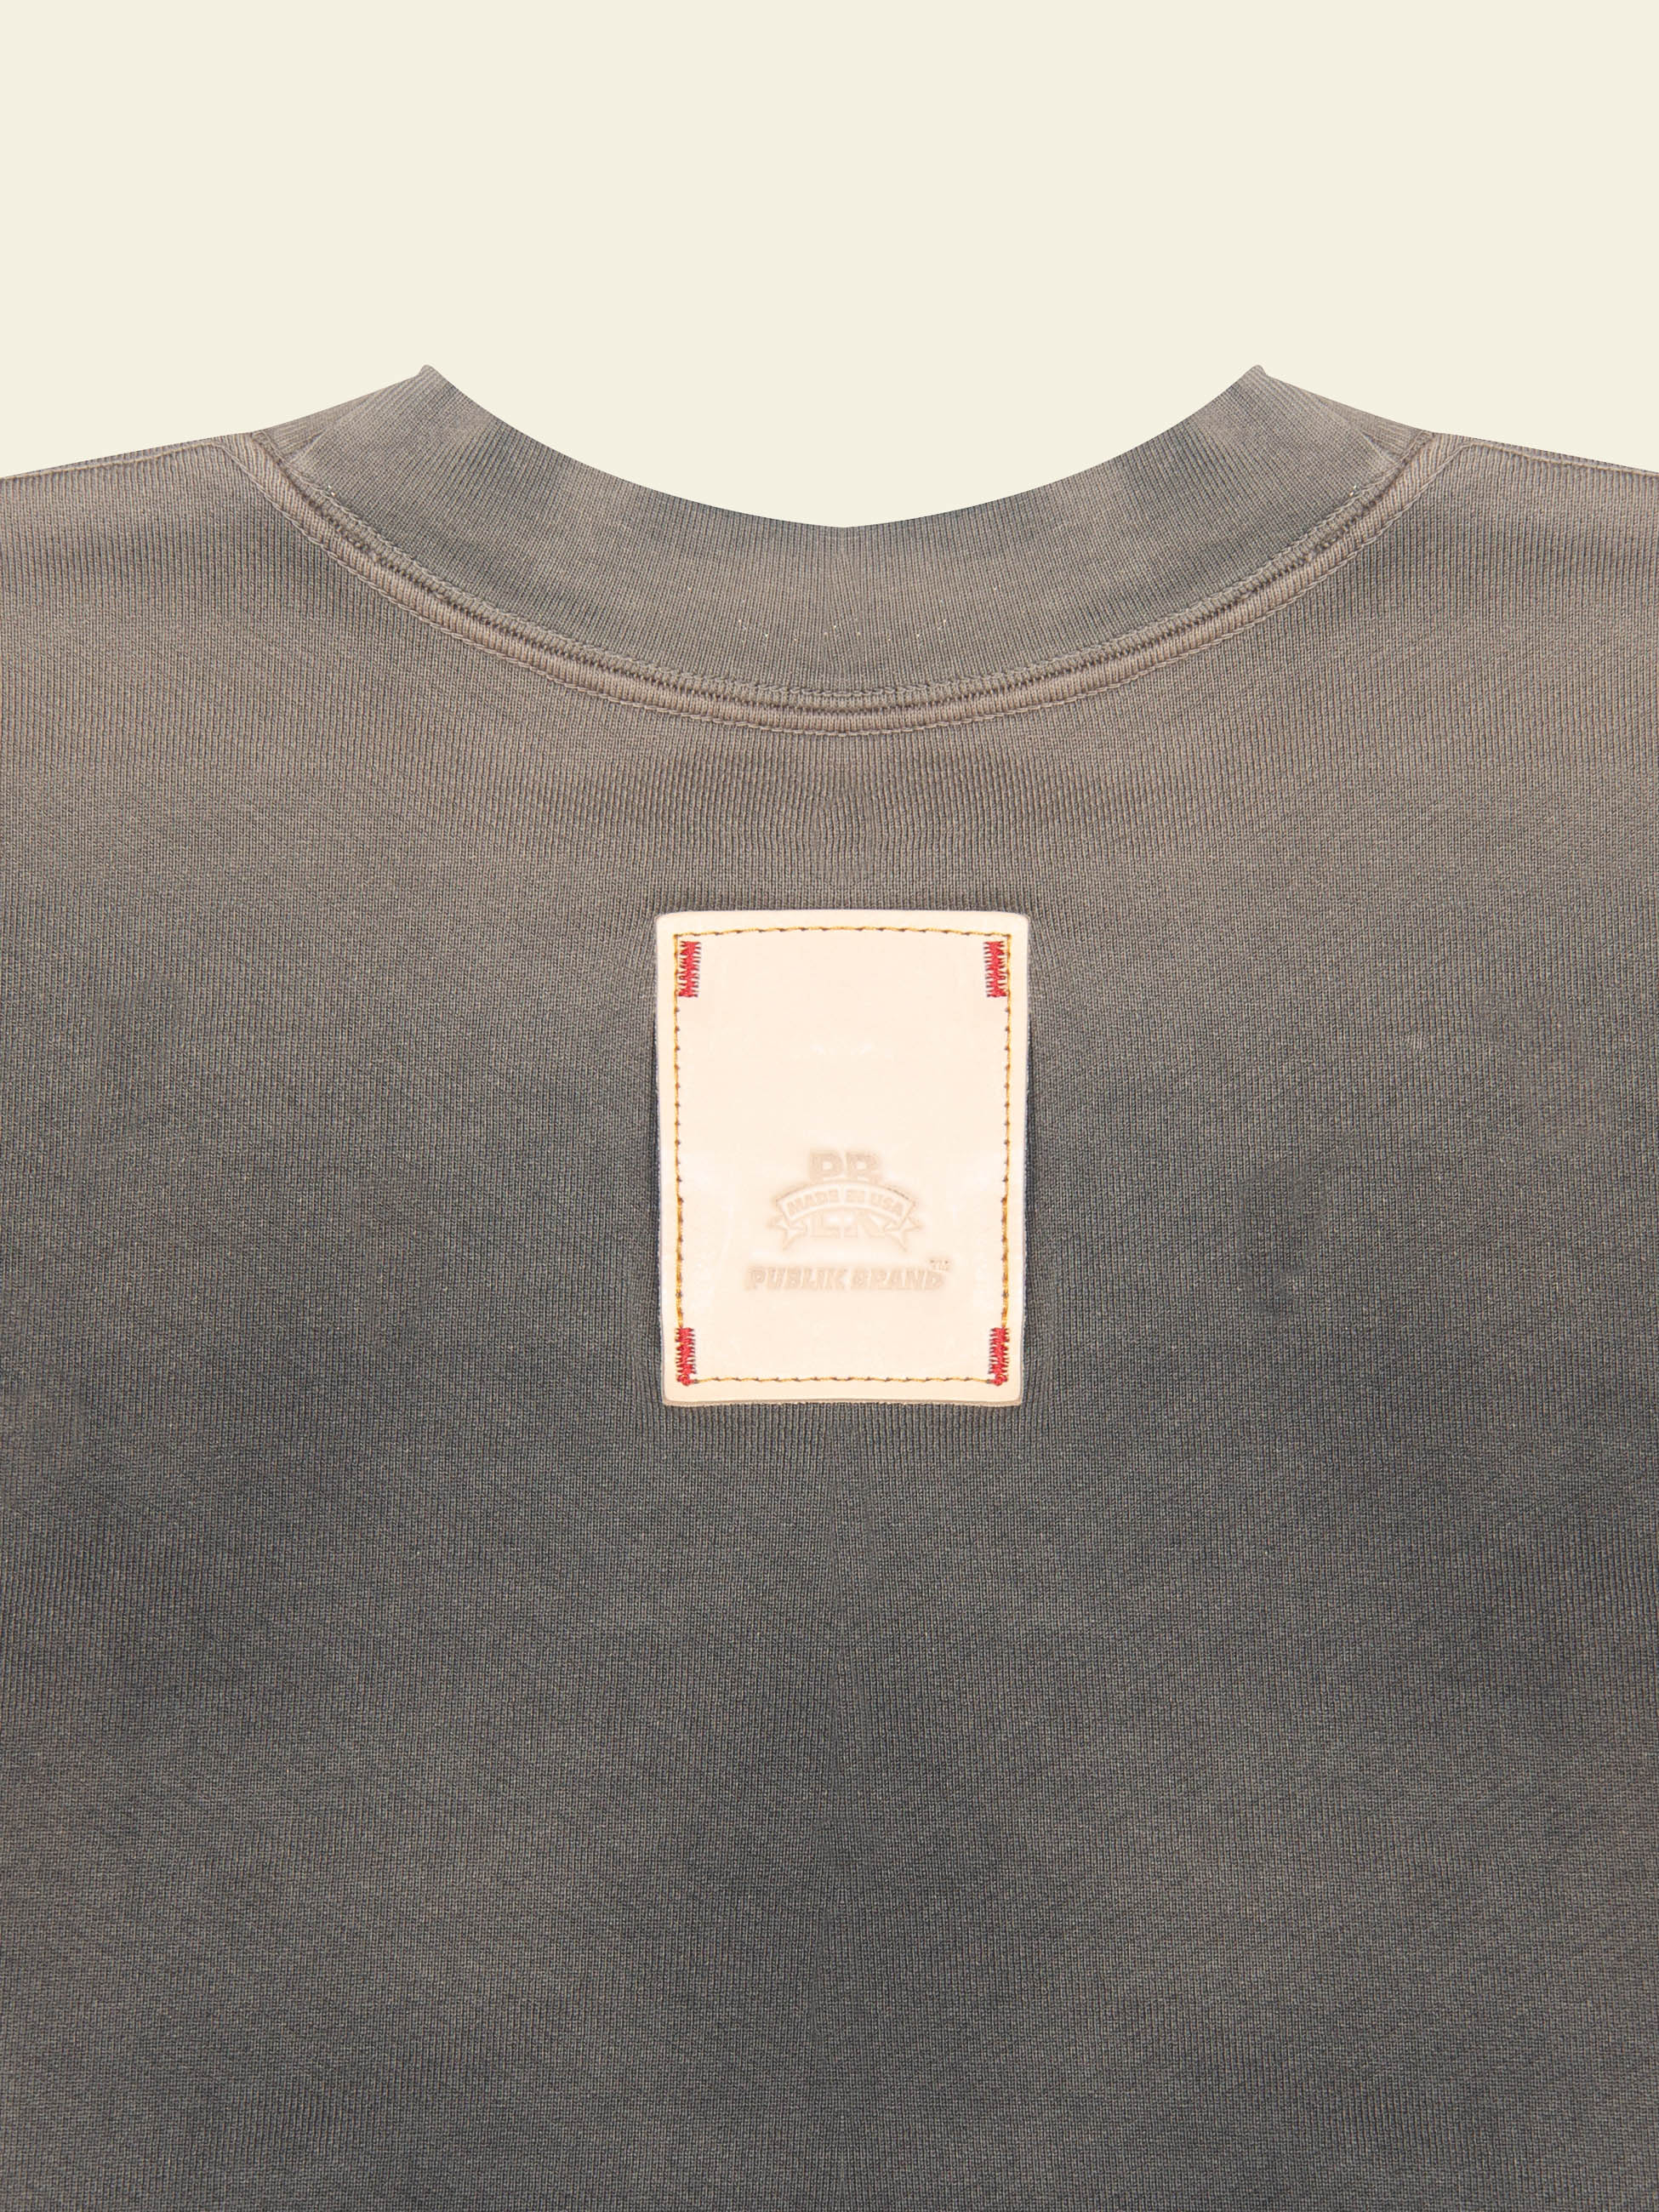 Publik Brand Double Layered Sweatshirt Crewneck Anchor Gray Heavyweight Fleece, all made in USA, back side detail